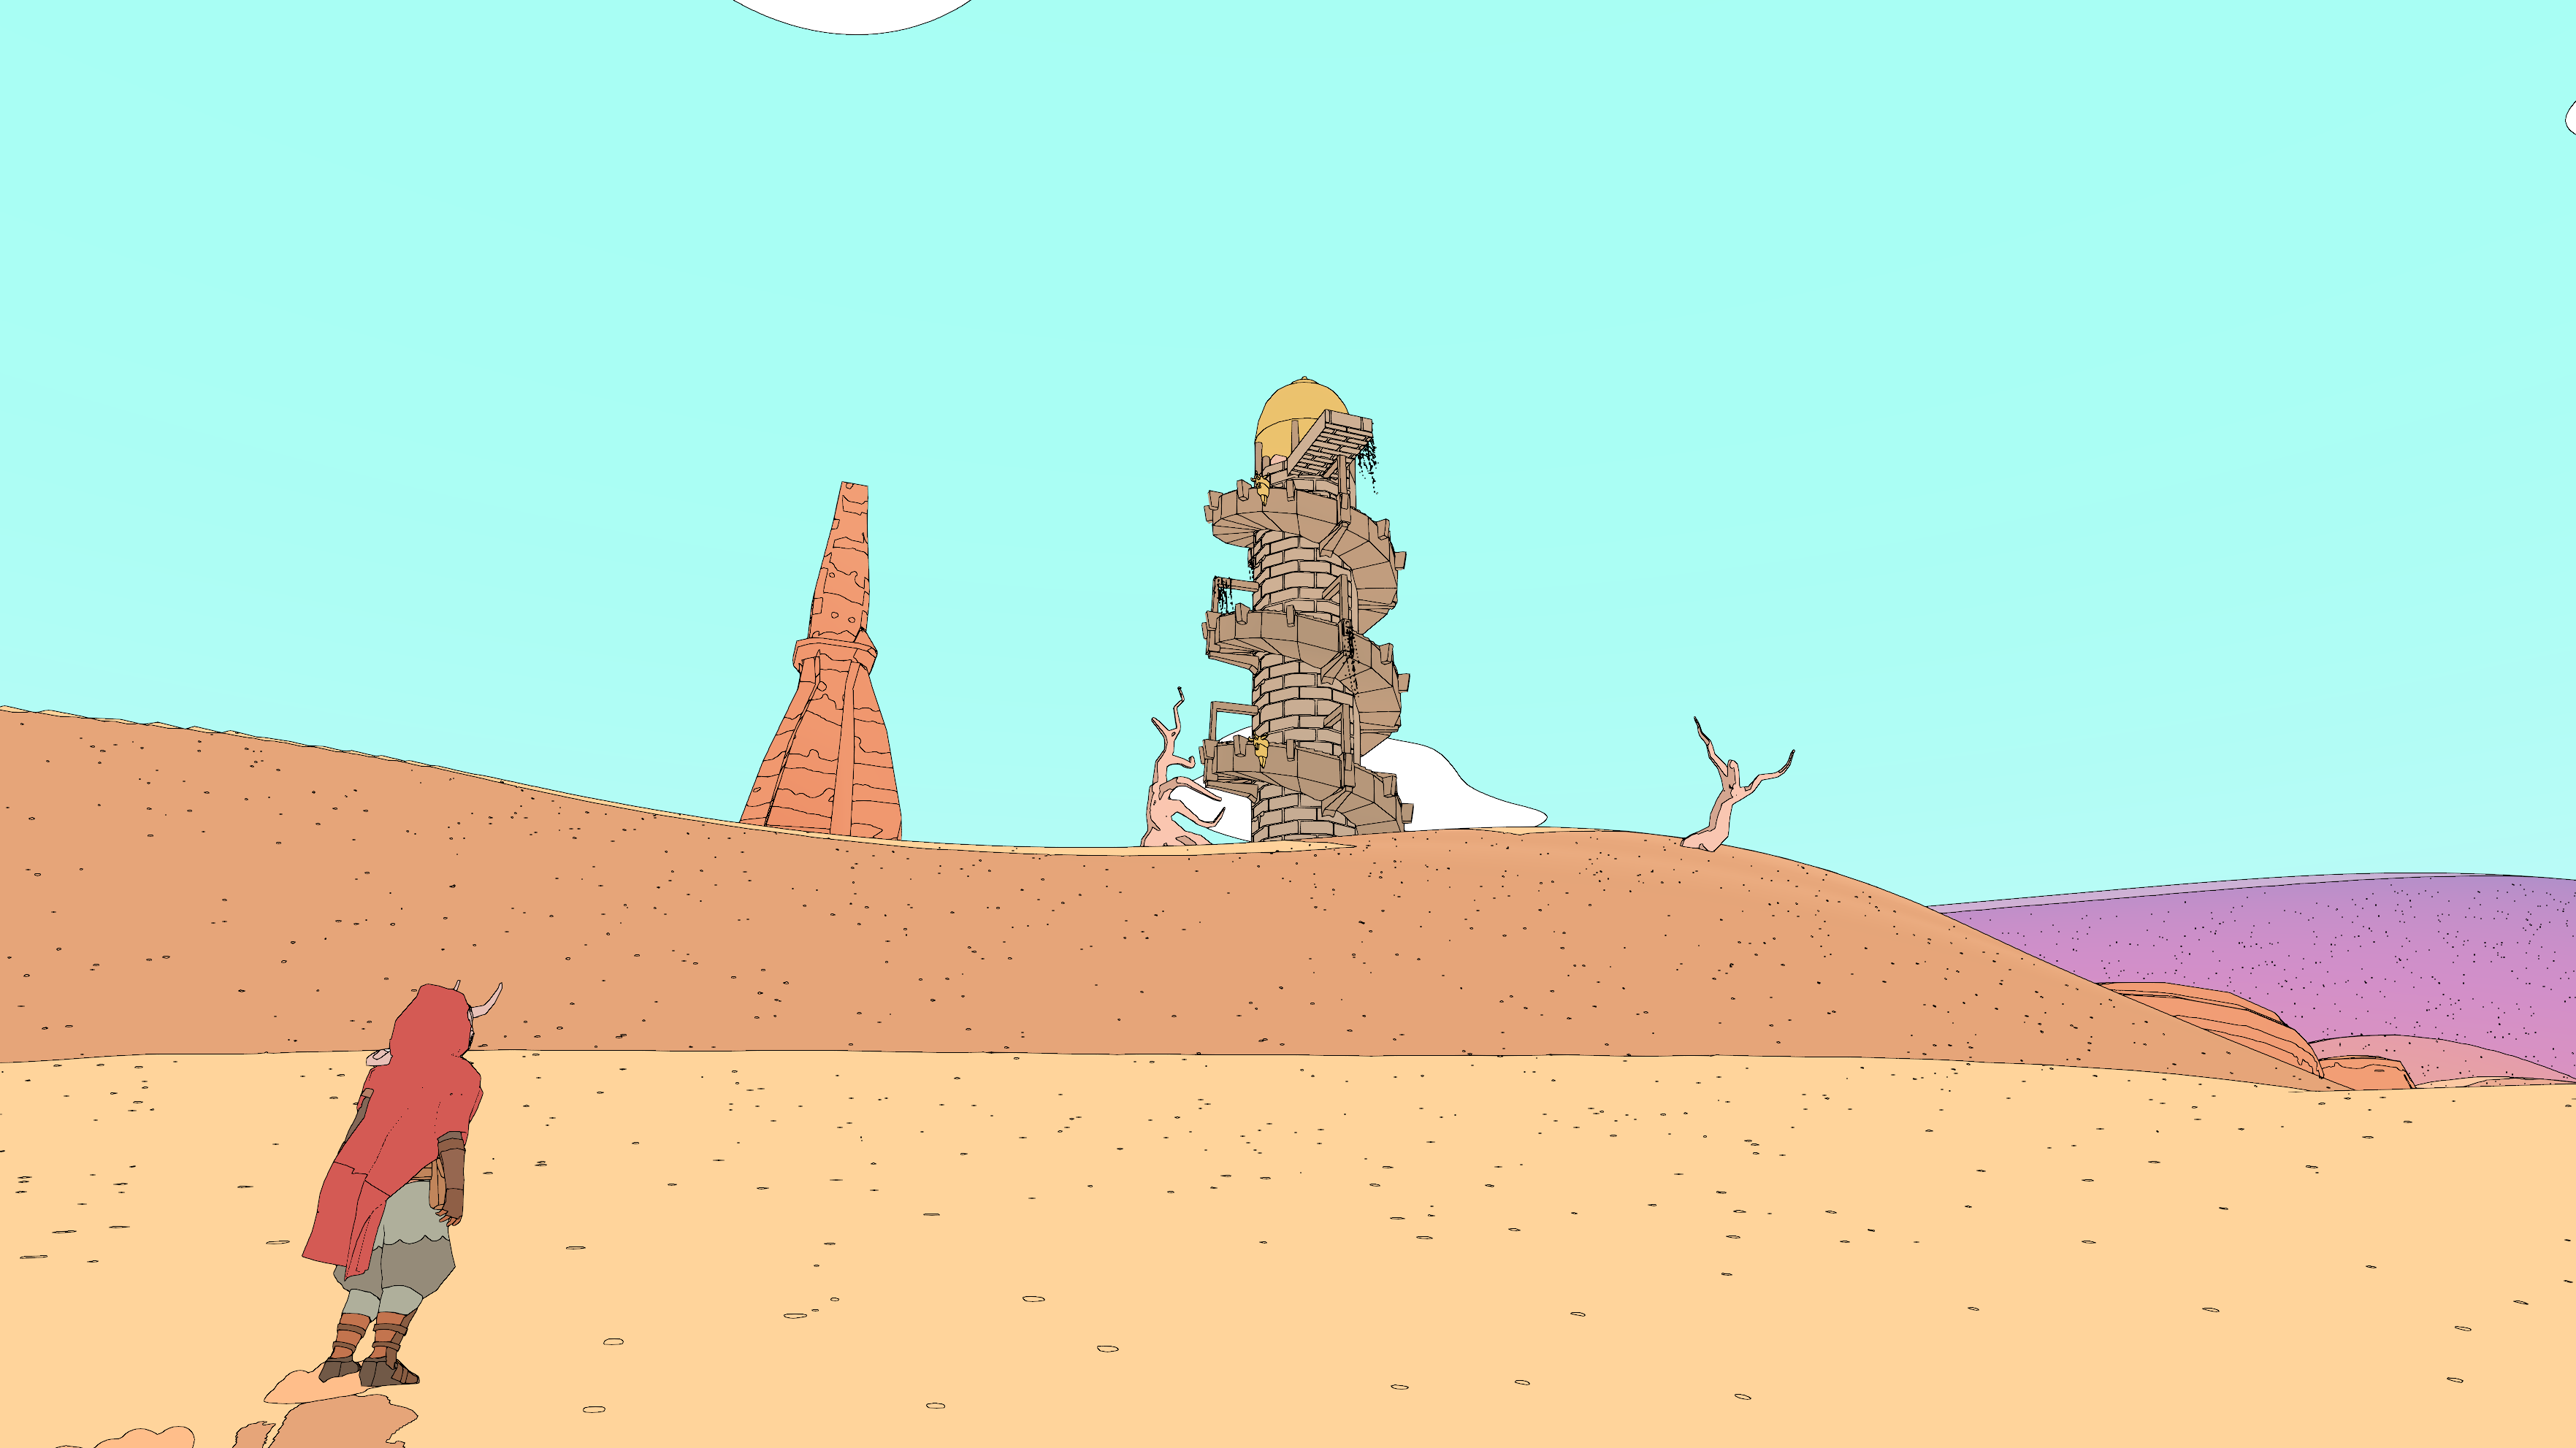 Sable game character walking toward a large tower